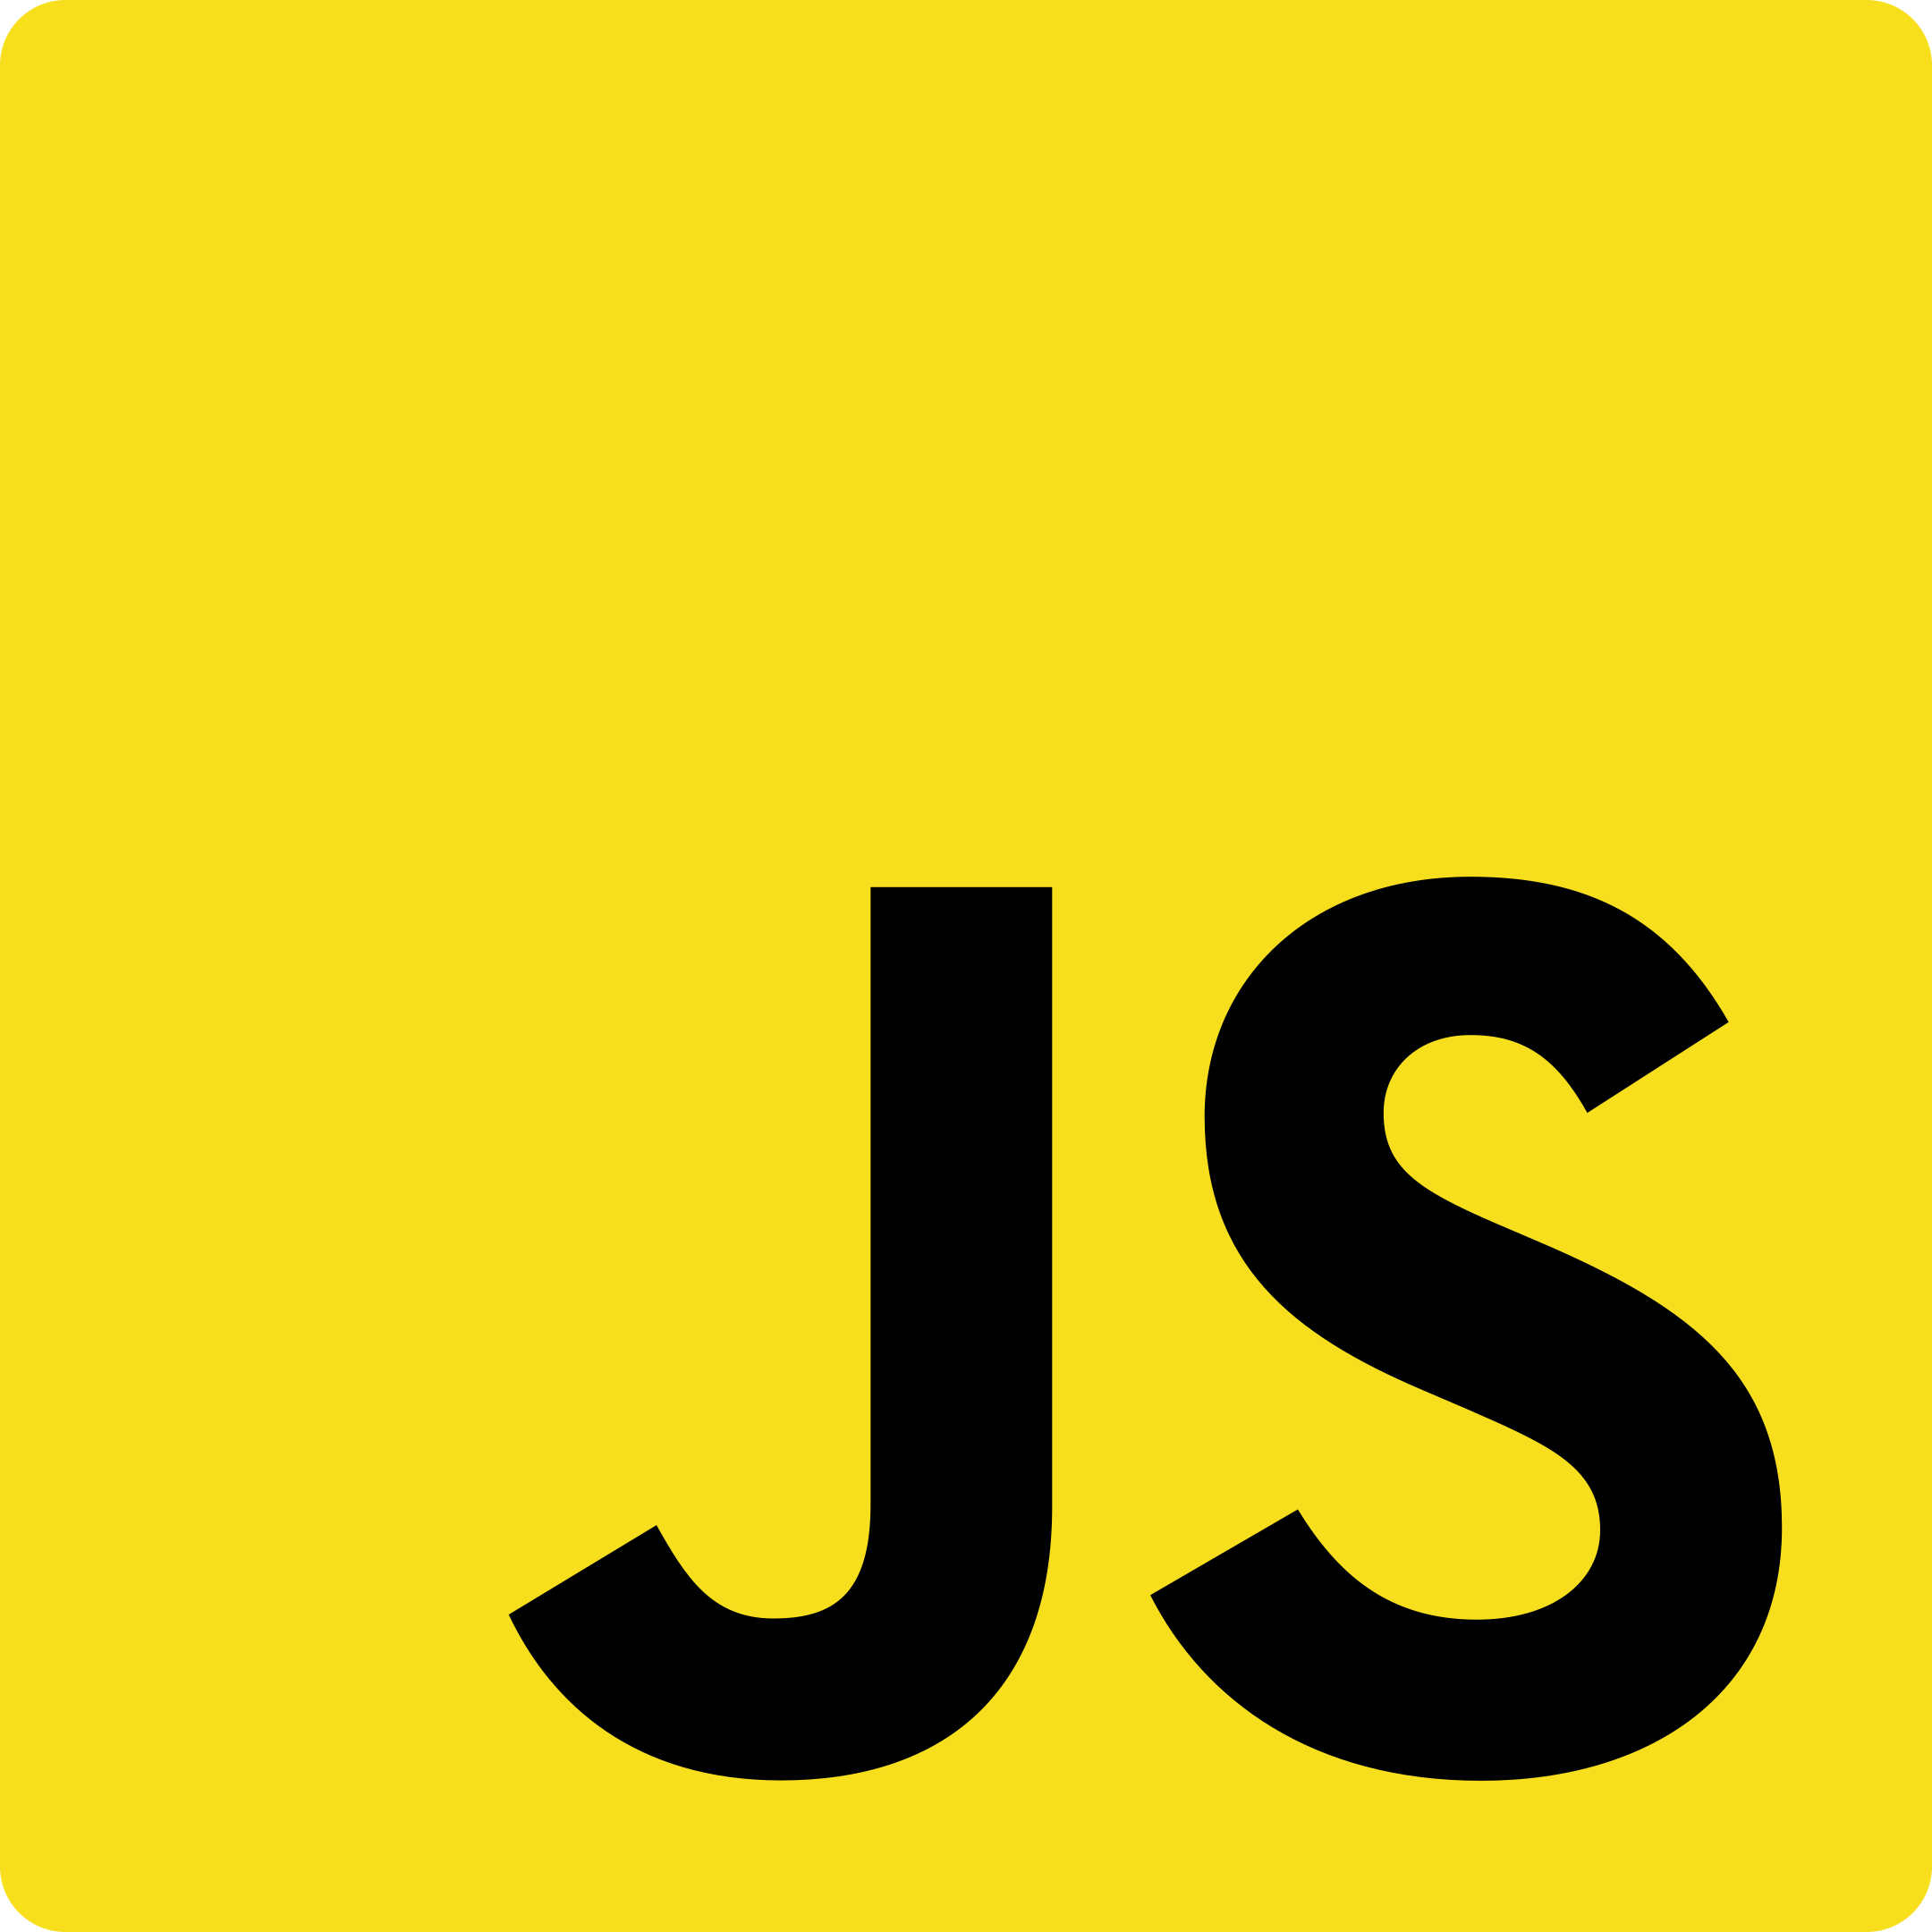 JavaJcript